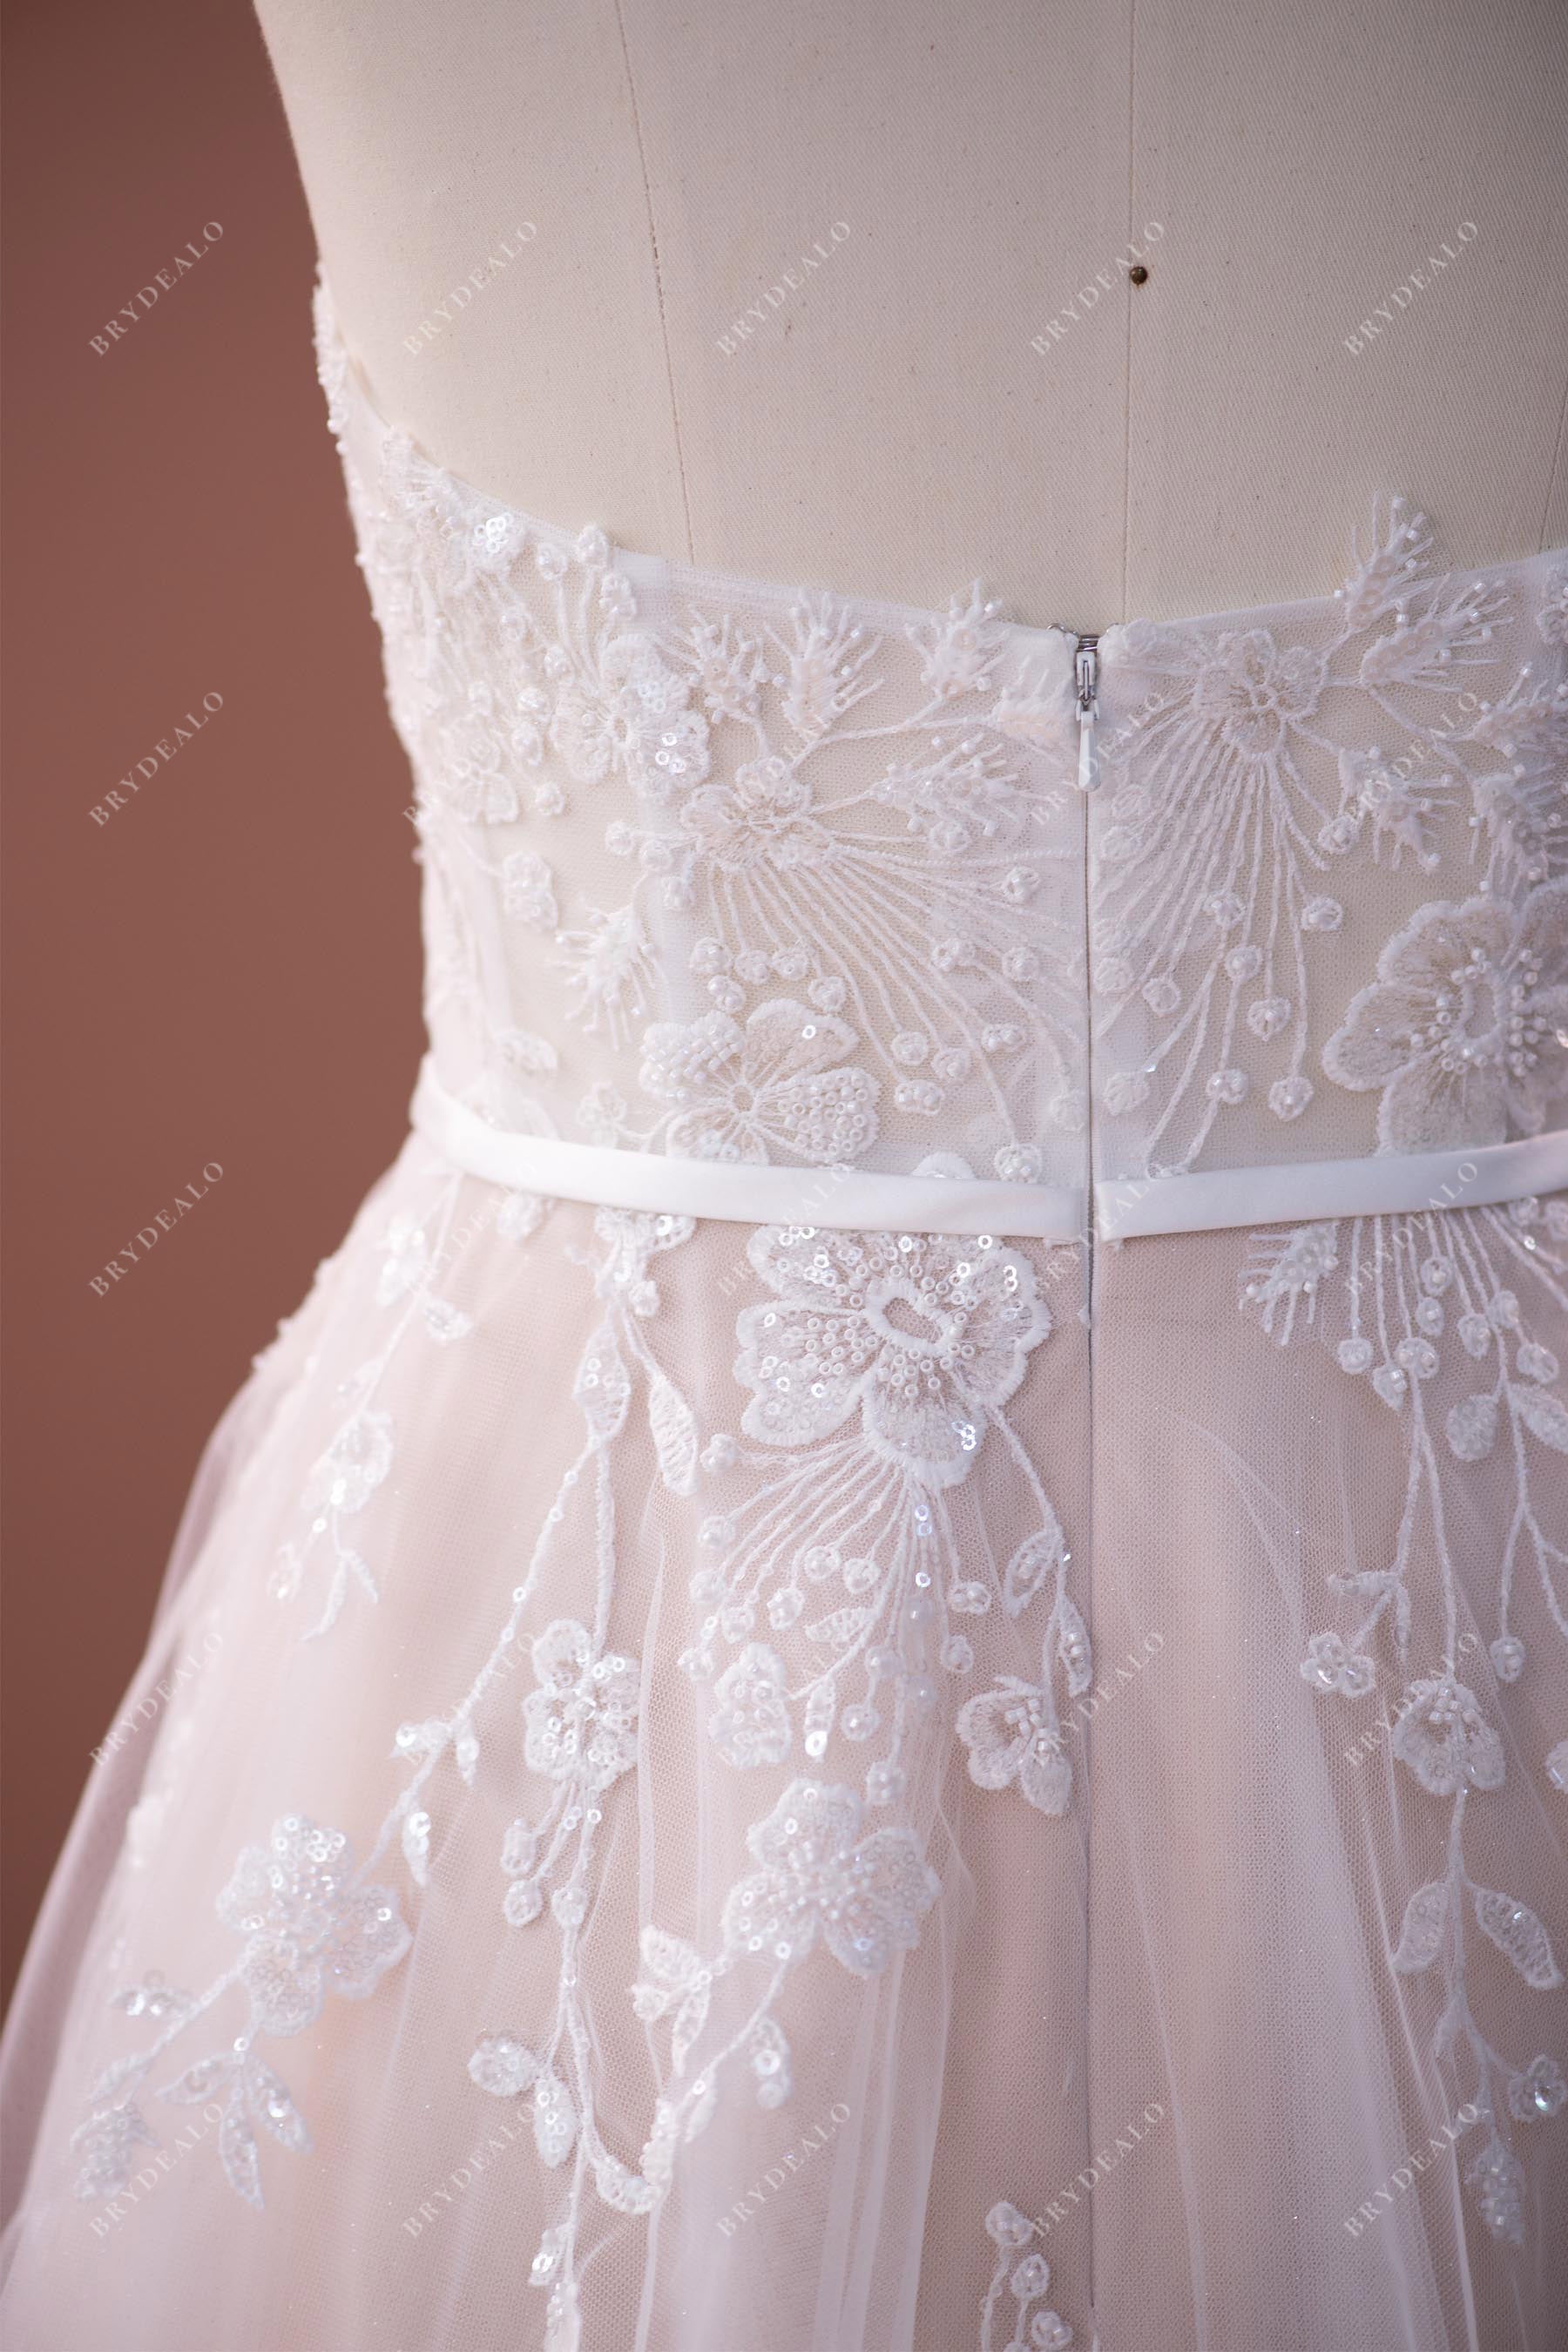 wedding dress with bowknot belt